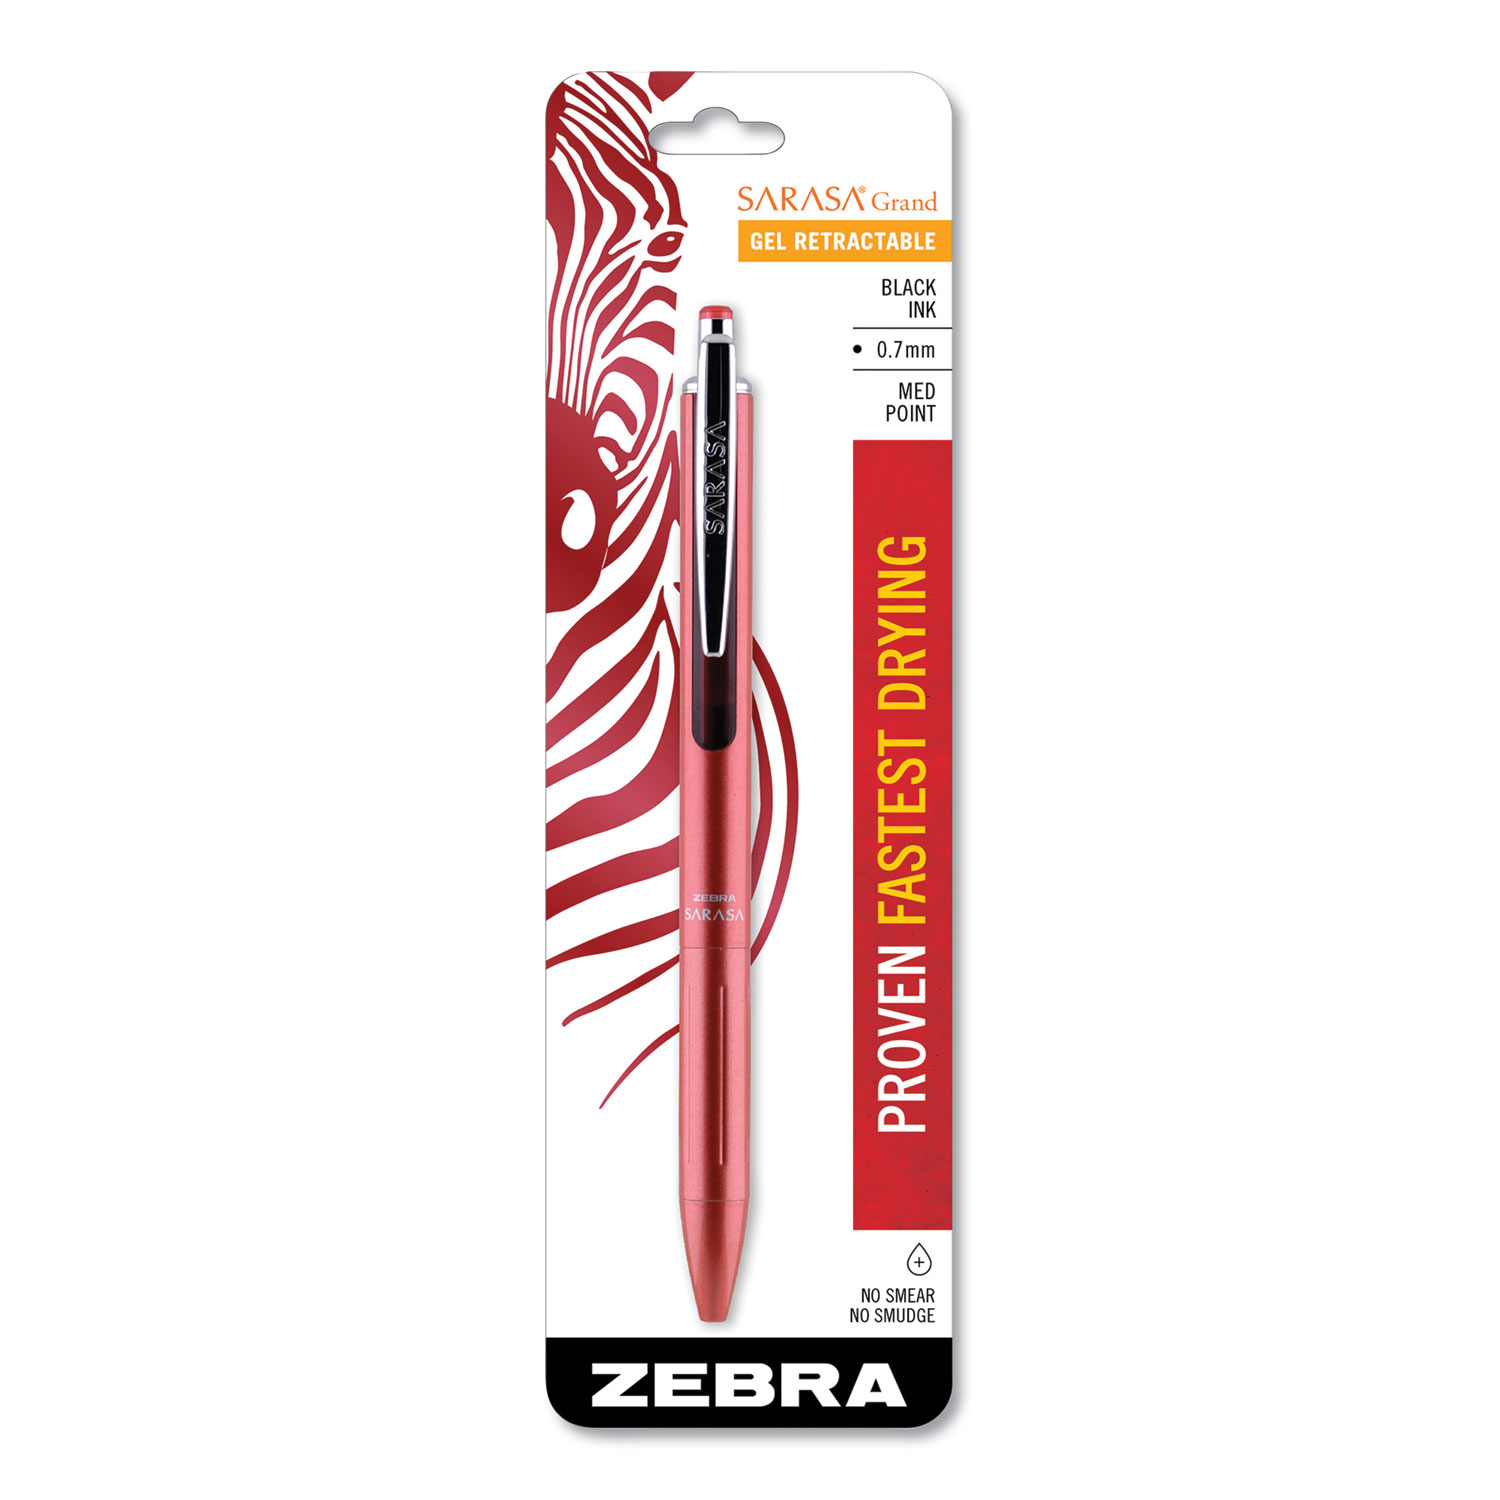  Zebra 45311 Blister-Carded Sarasa Grand Retractable Gel Pen, Medium 0.7mm, Black Ink, Rose Gold Barrel (ZEB45311) 